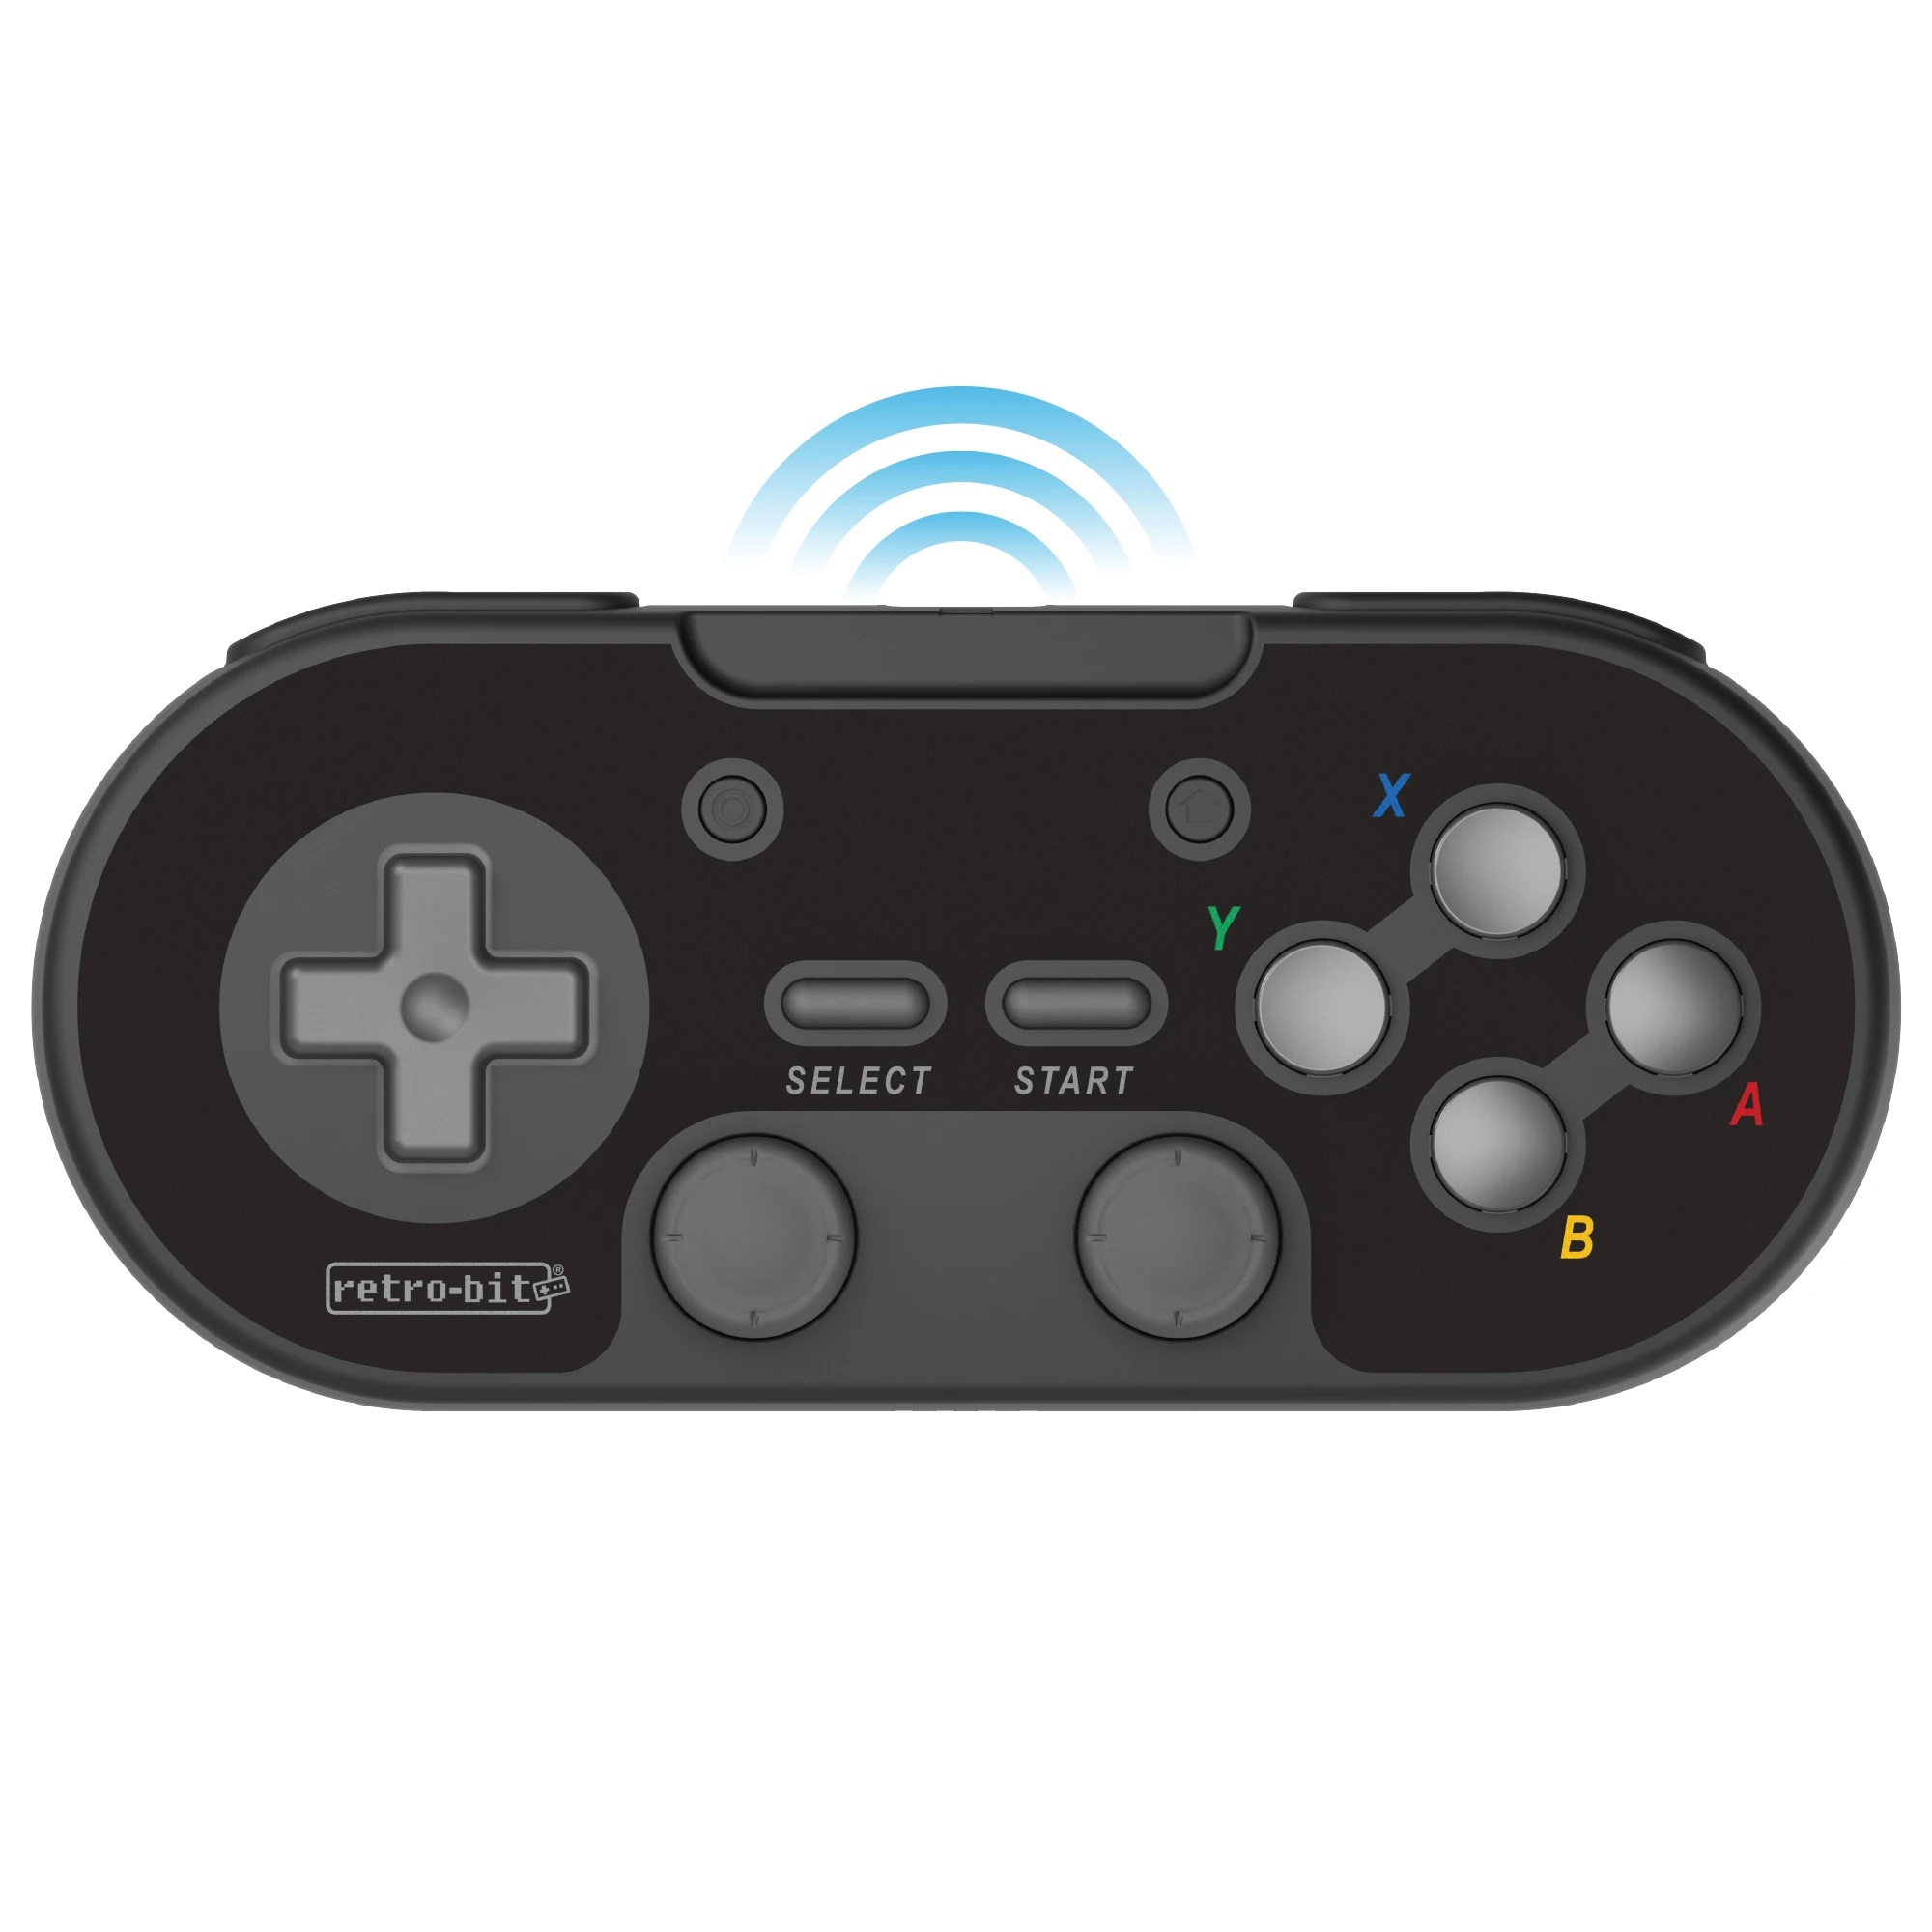 SNES Legacy 16 wireless controller by Retro-bit